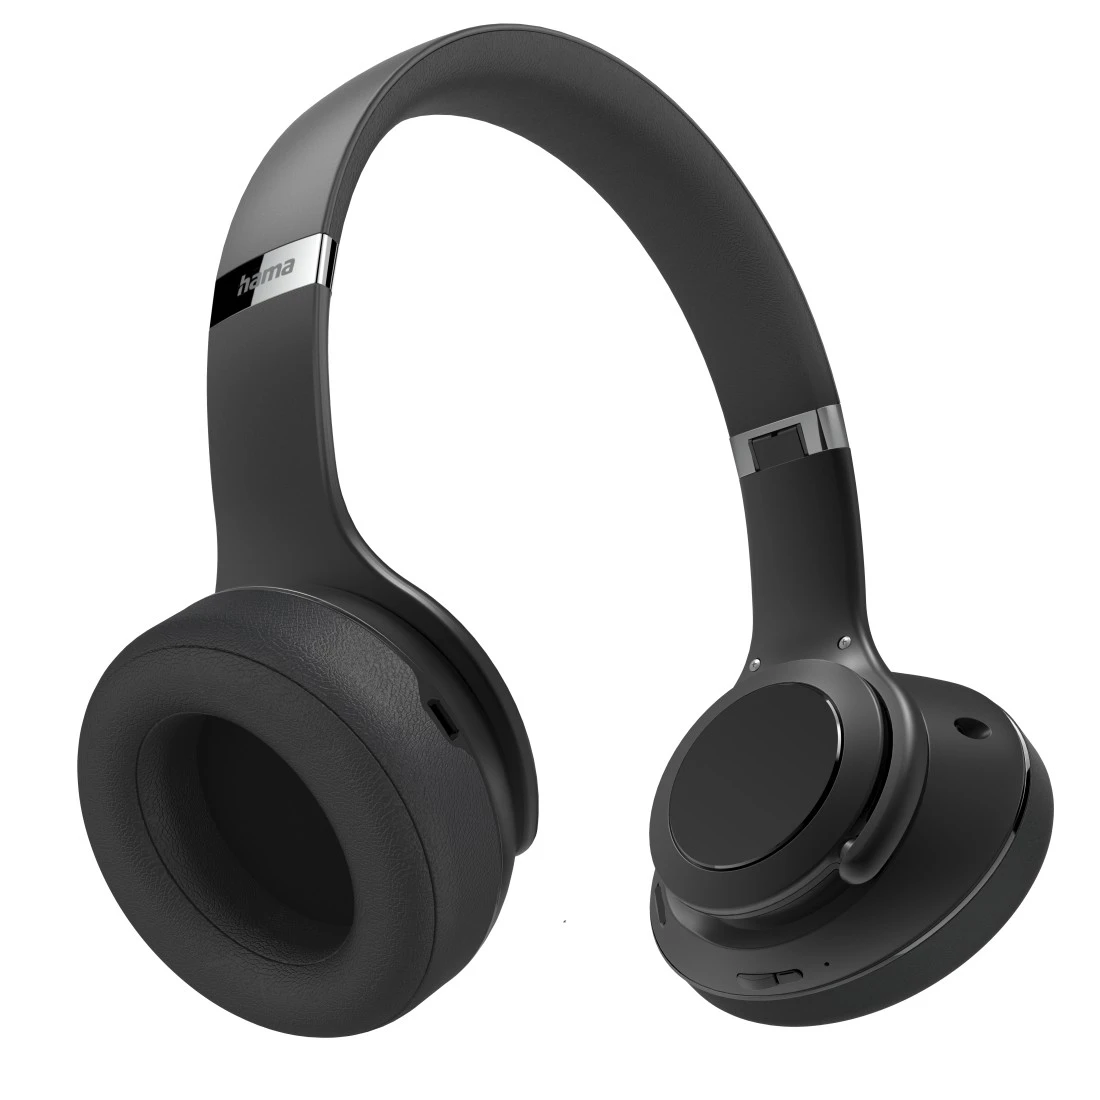 Bluetooth®-Kopfhörer "Passion Turn", Over-Ear, Lautsprecher, EQ, faltbar, S  | Hama